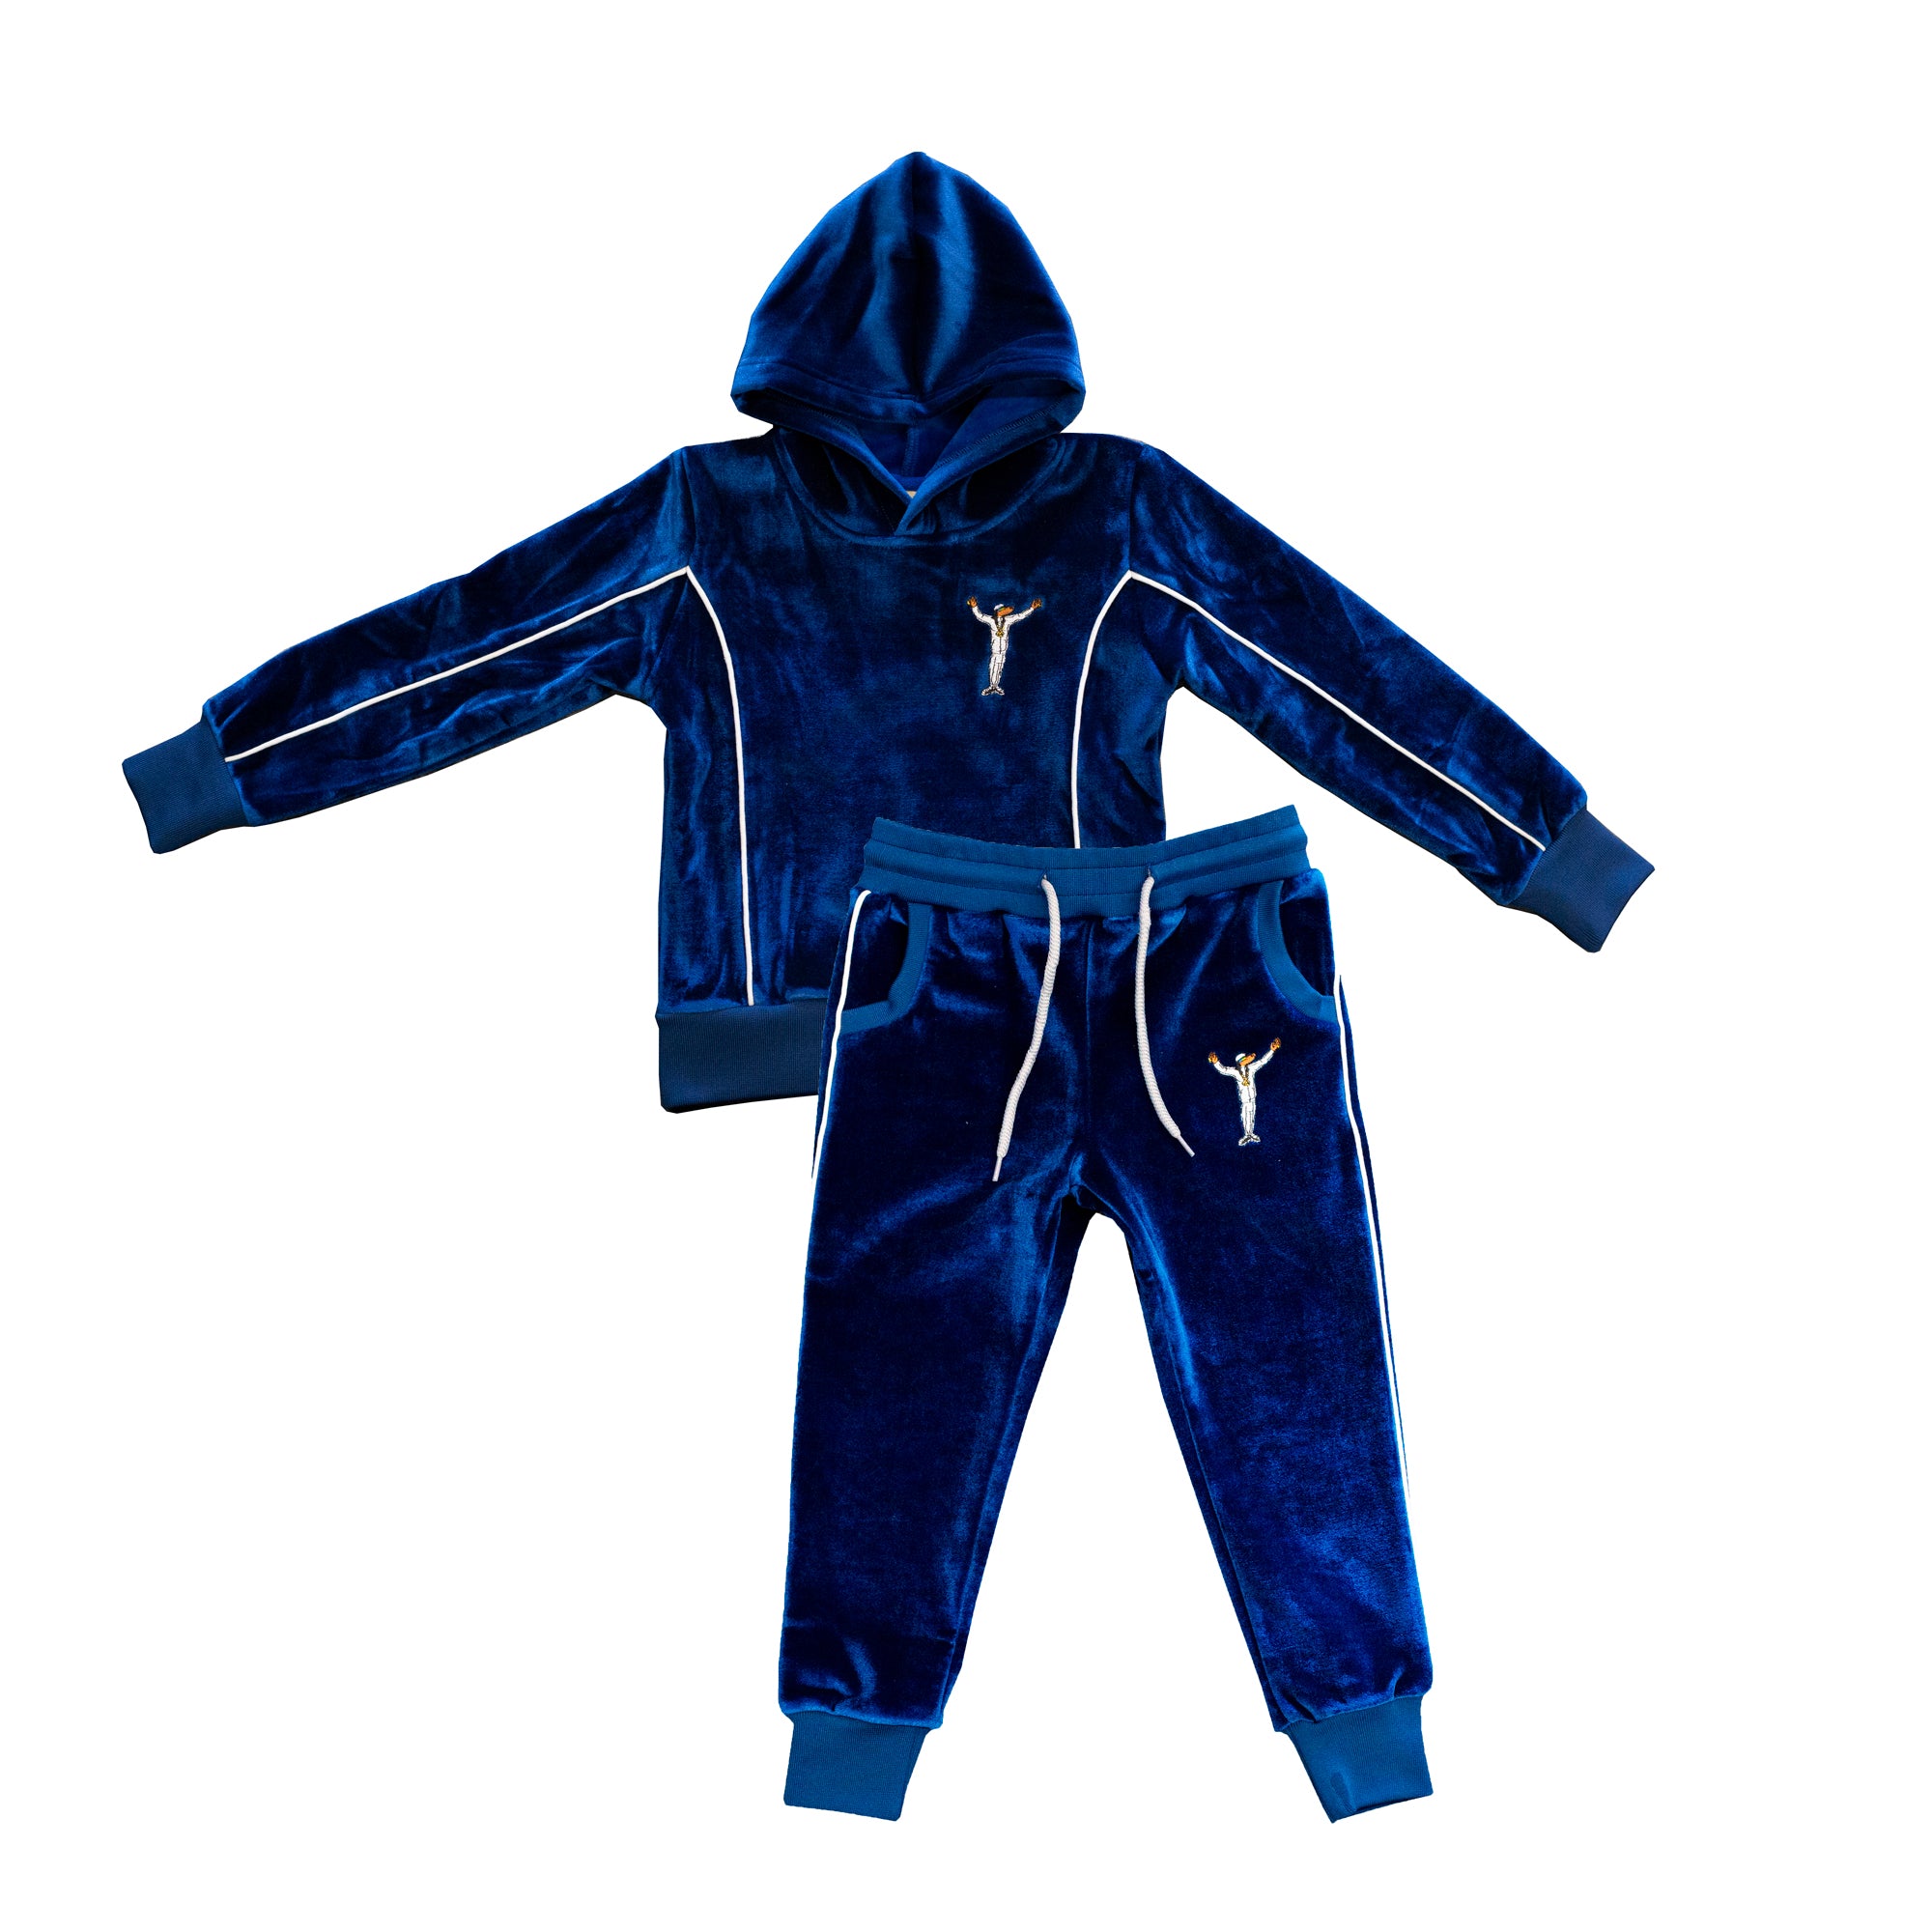 Kids Blue Velour Sweatsuit